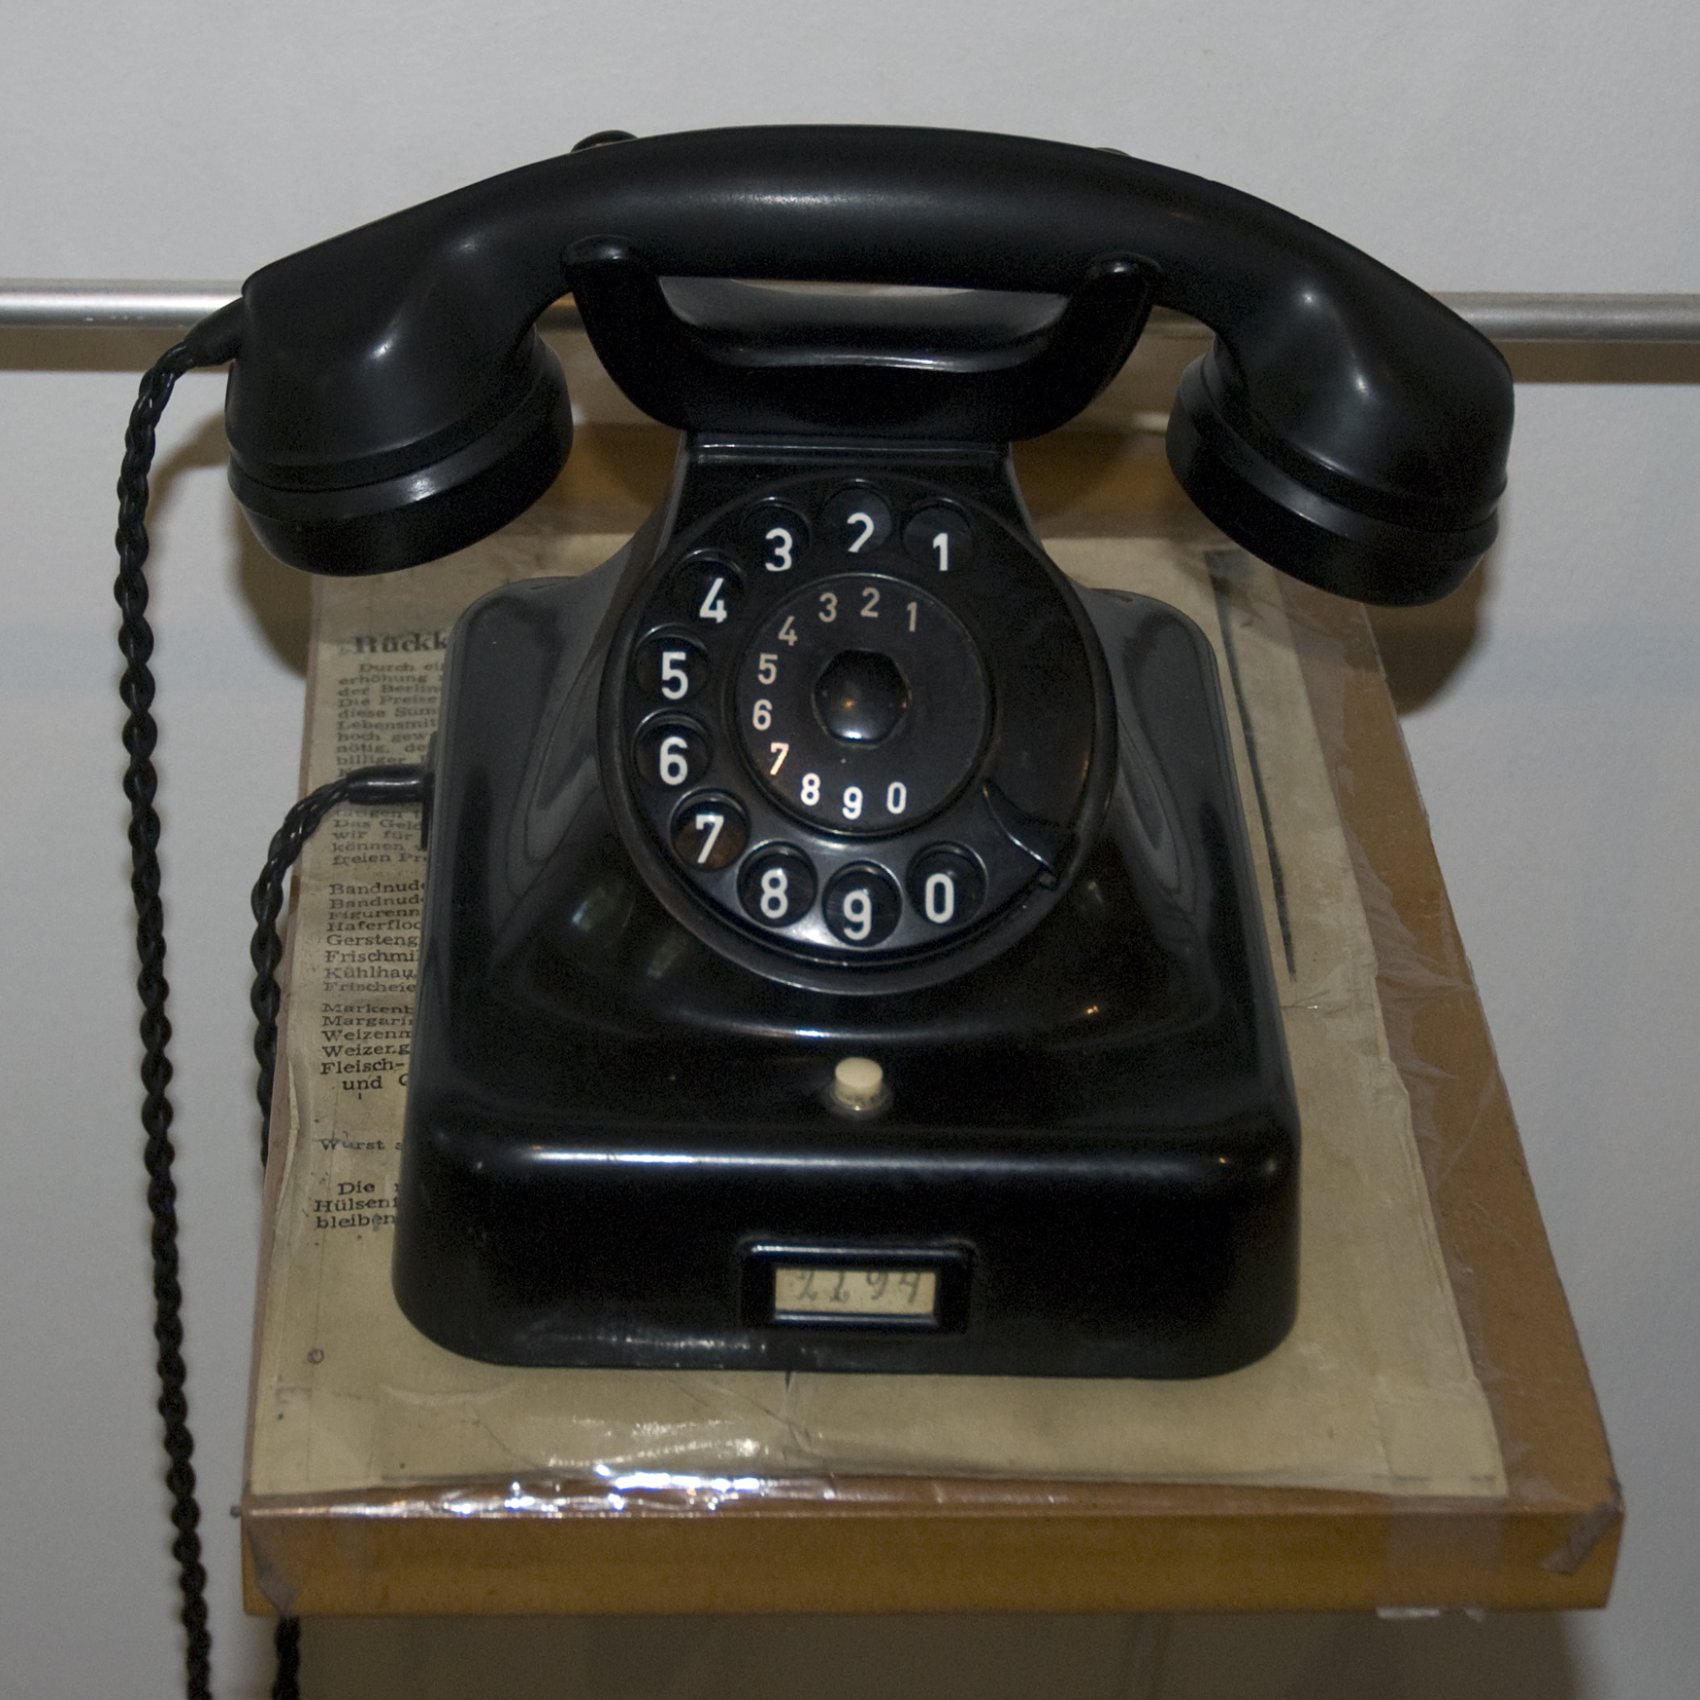 File:Old telephone (5983560279).jpg - Wikimedia Commons